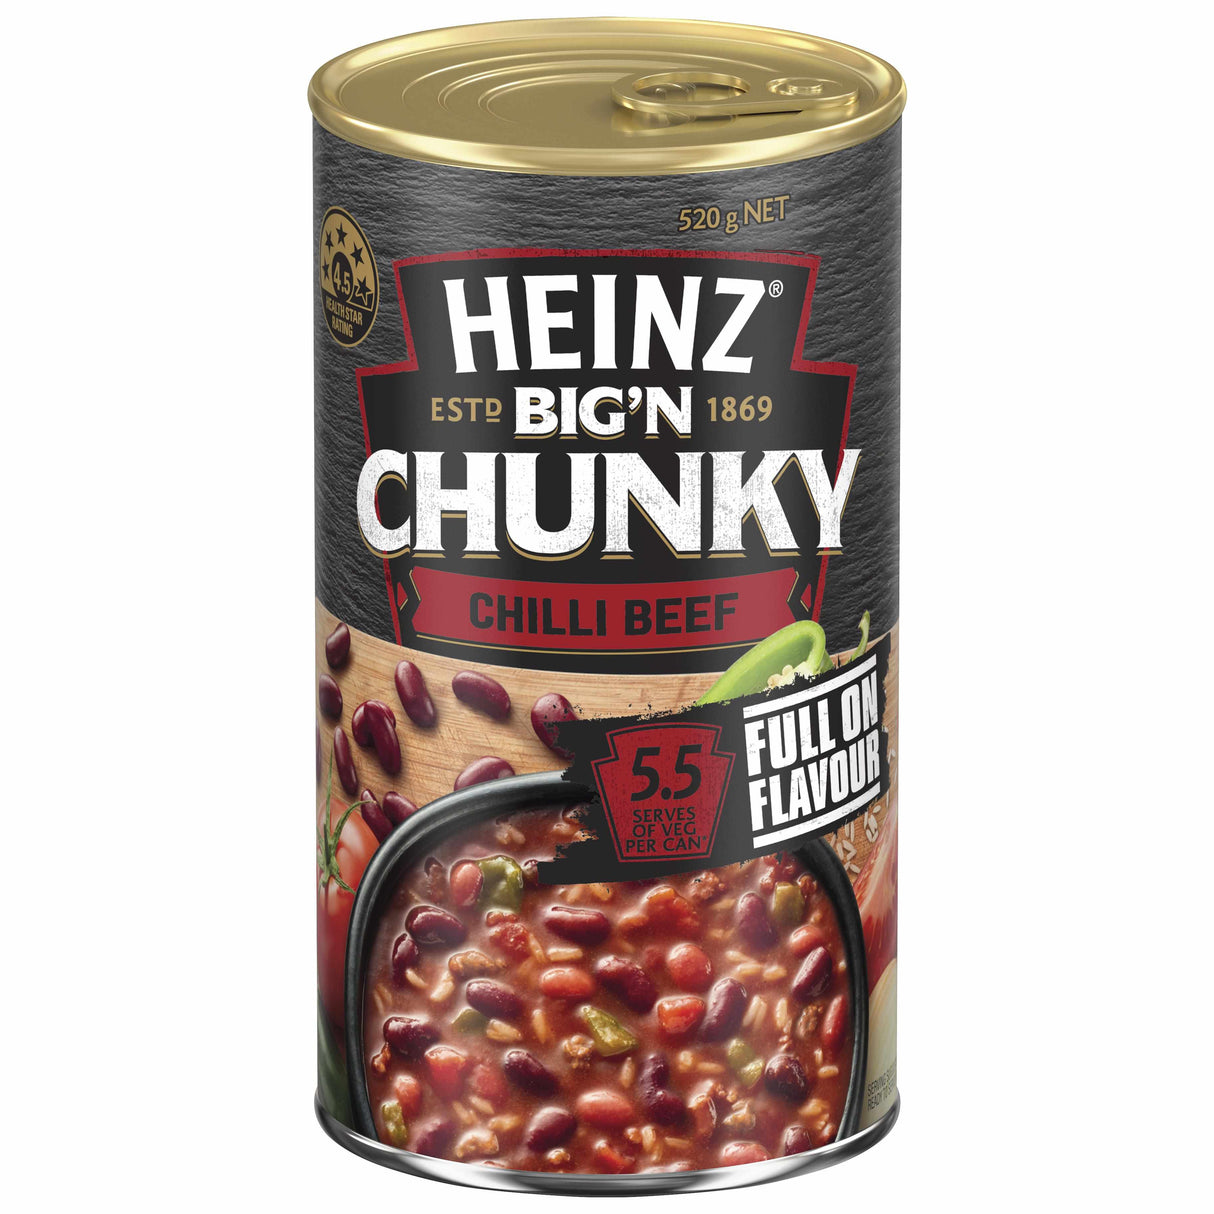 Heinz Big'N Chunky Chilli Beef Soup 520g